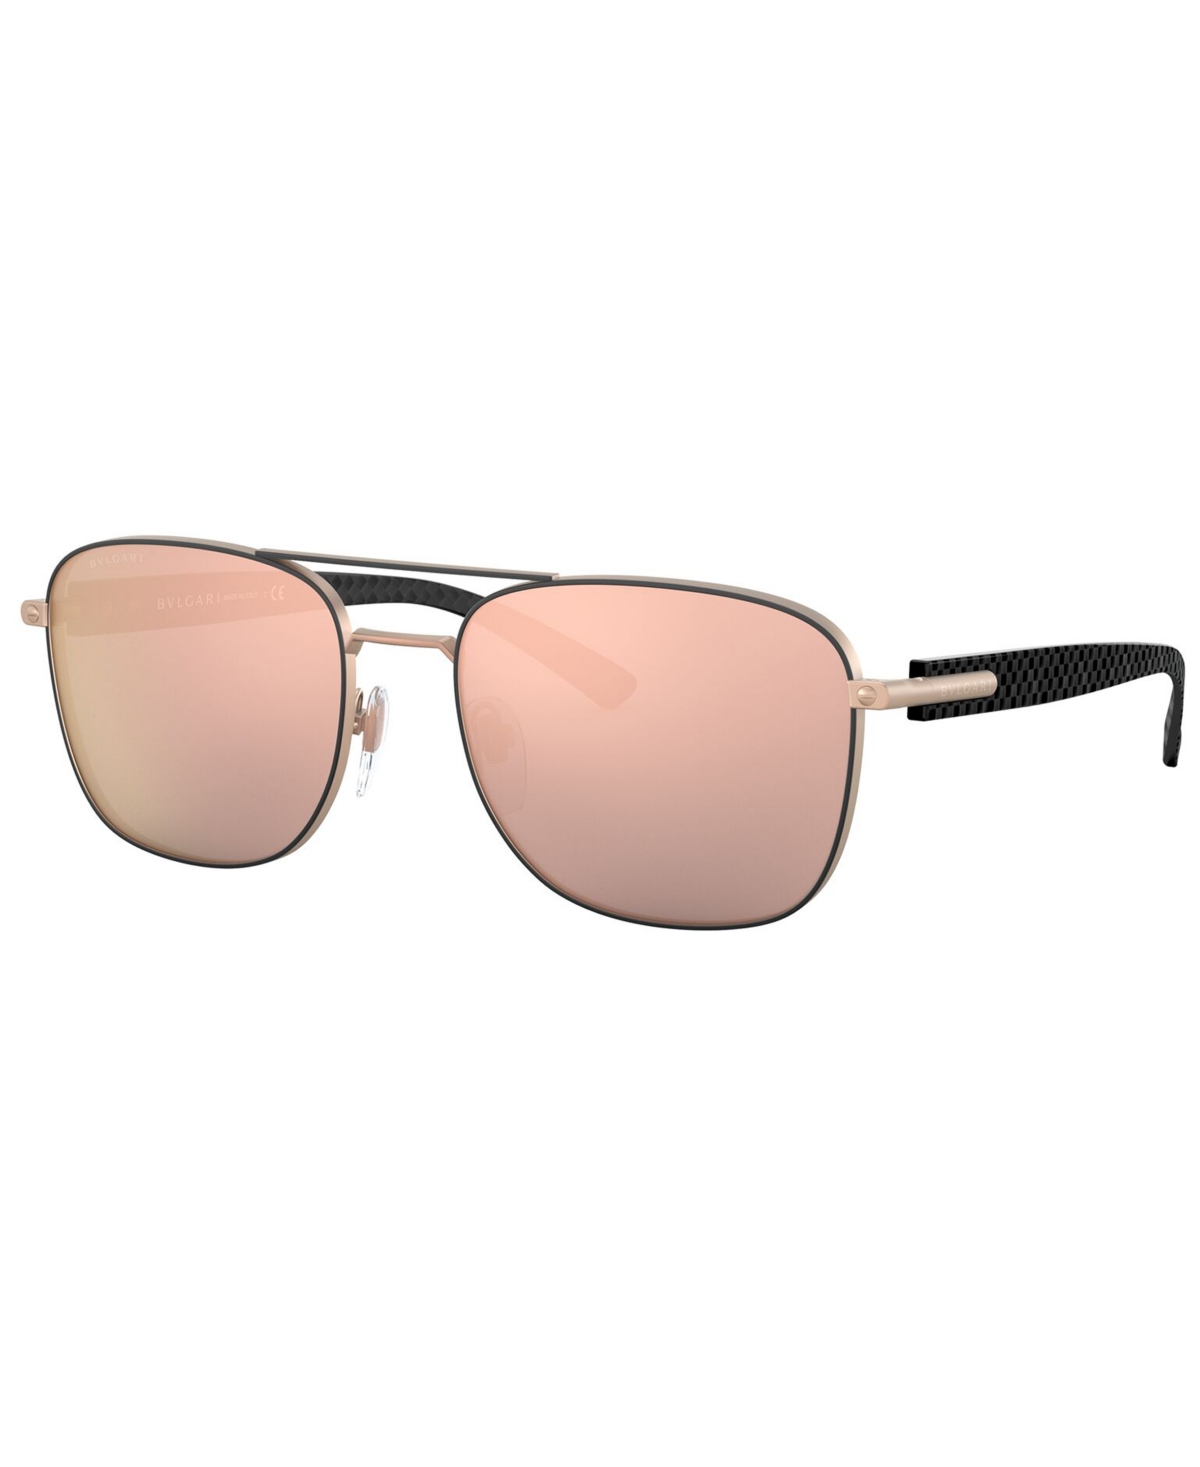 Bvlgari Men's Sunglasses, Bv5050 In Matte Black,matte Pink Gold,grey Mirror